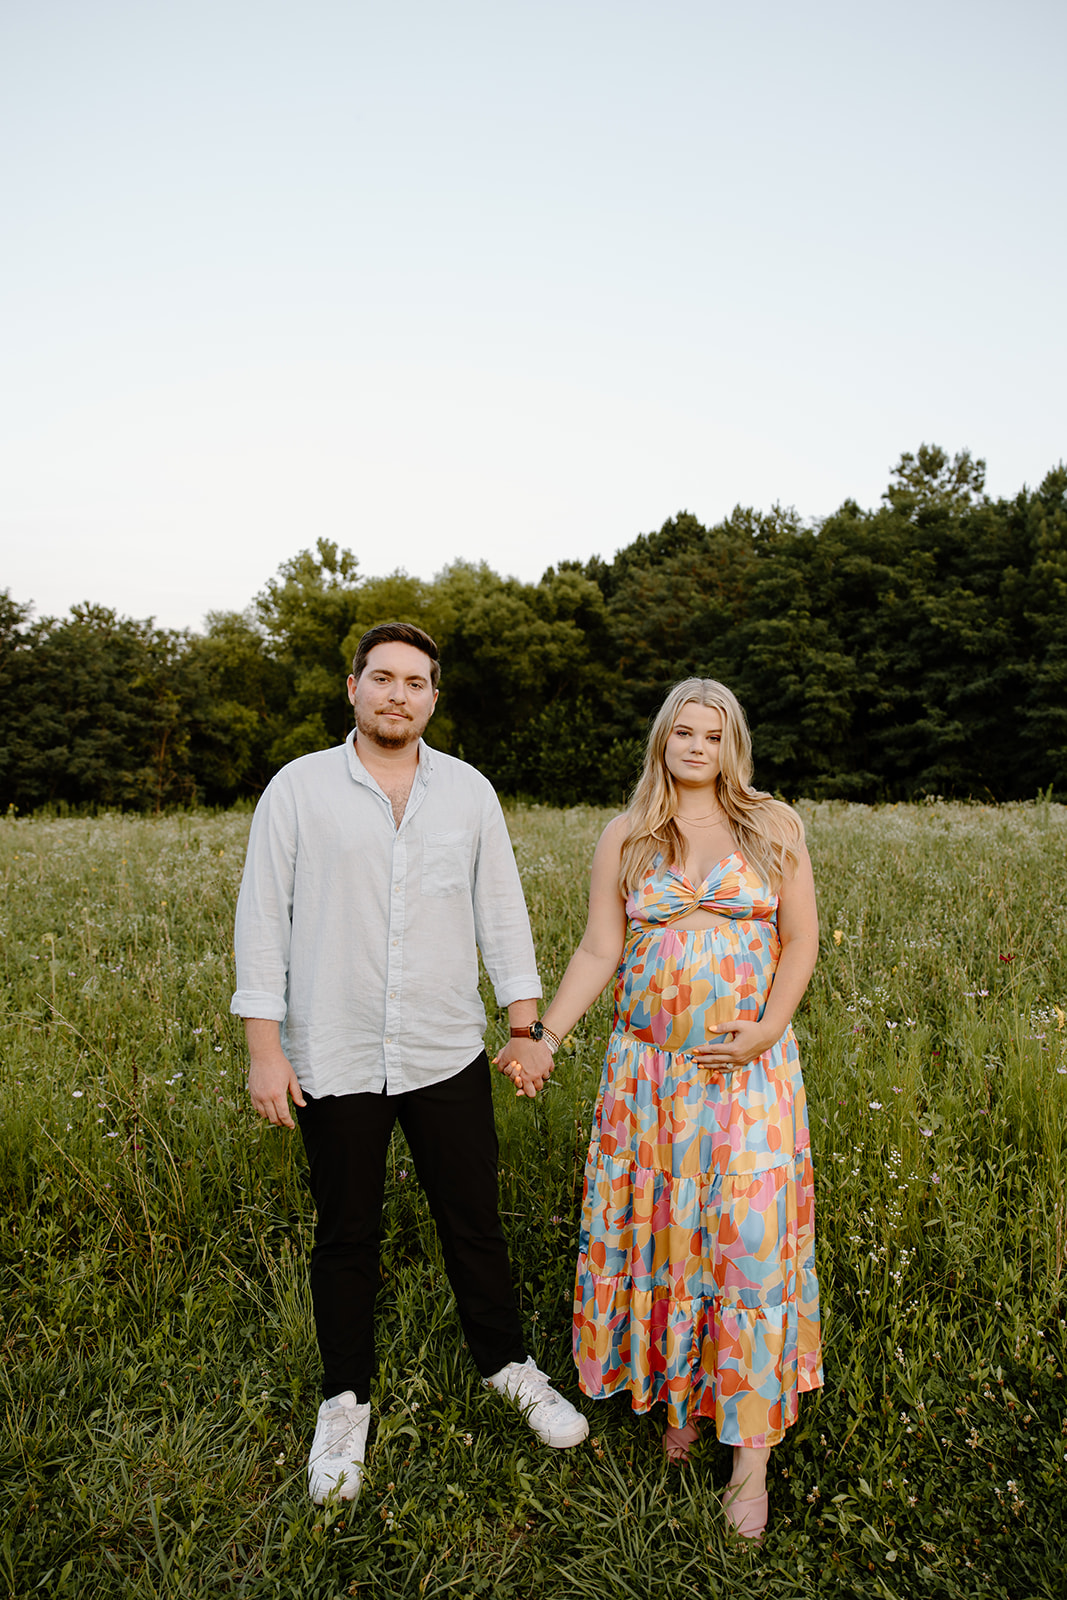 Wildflower field couples pregnancy announcement photos